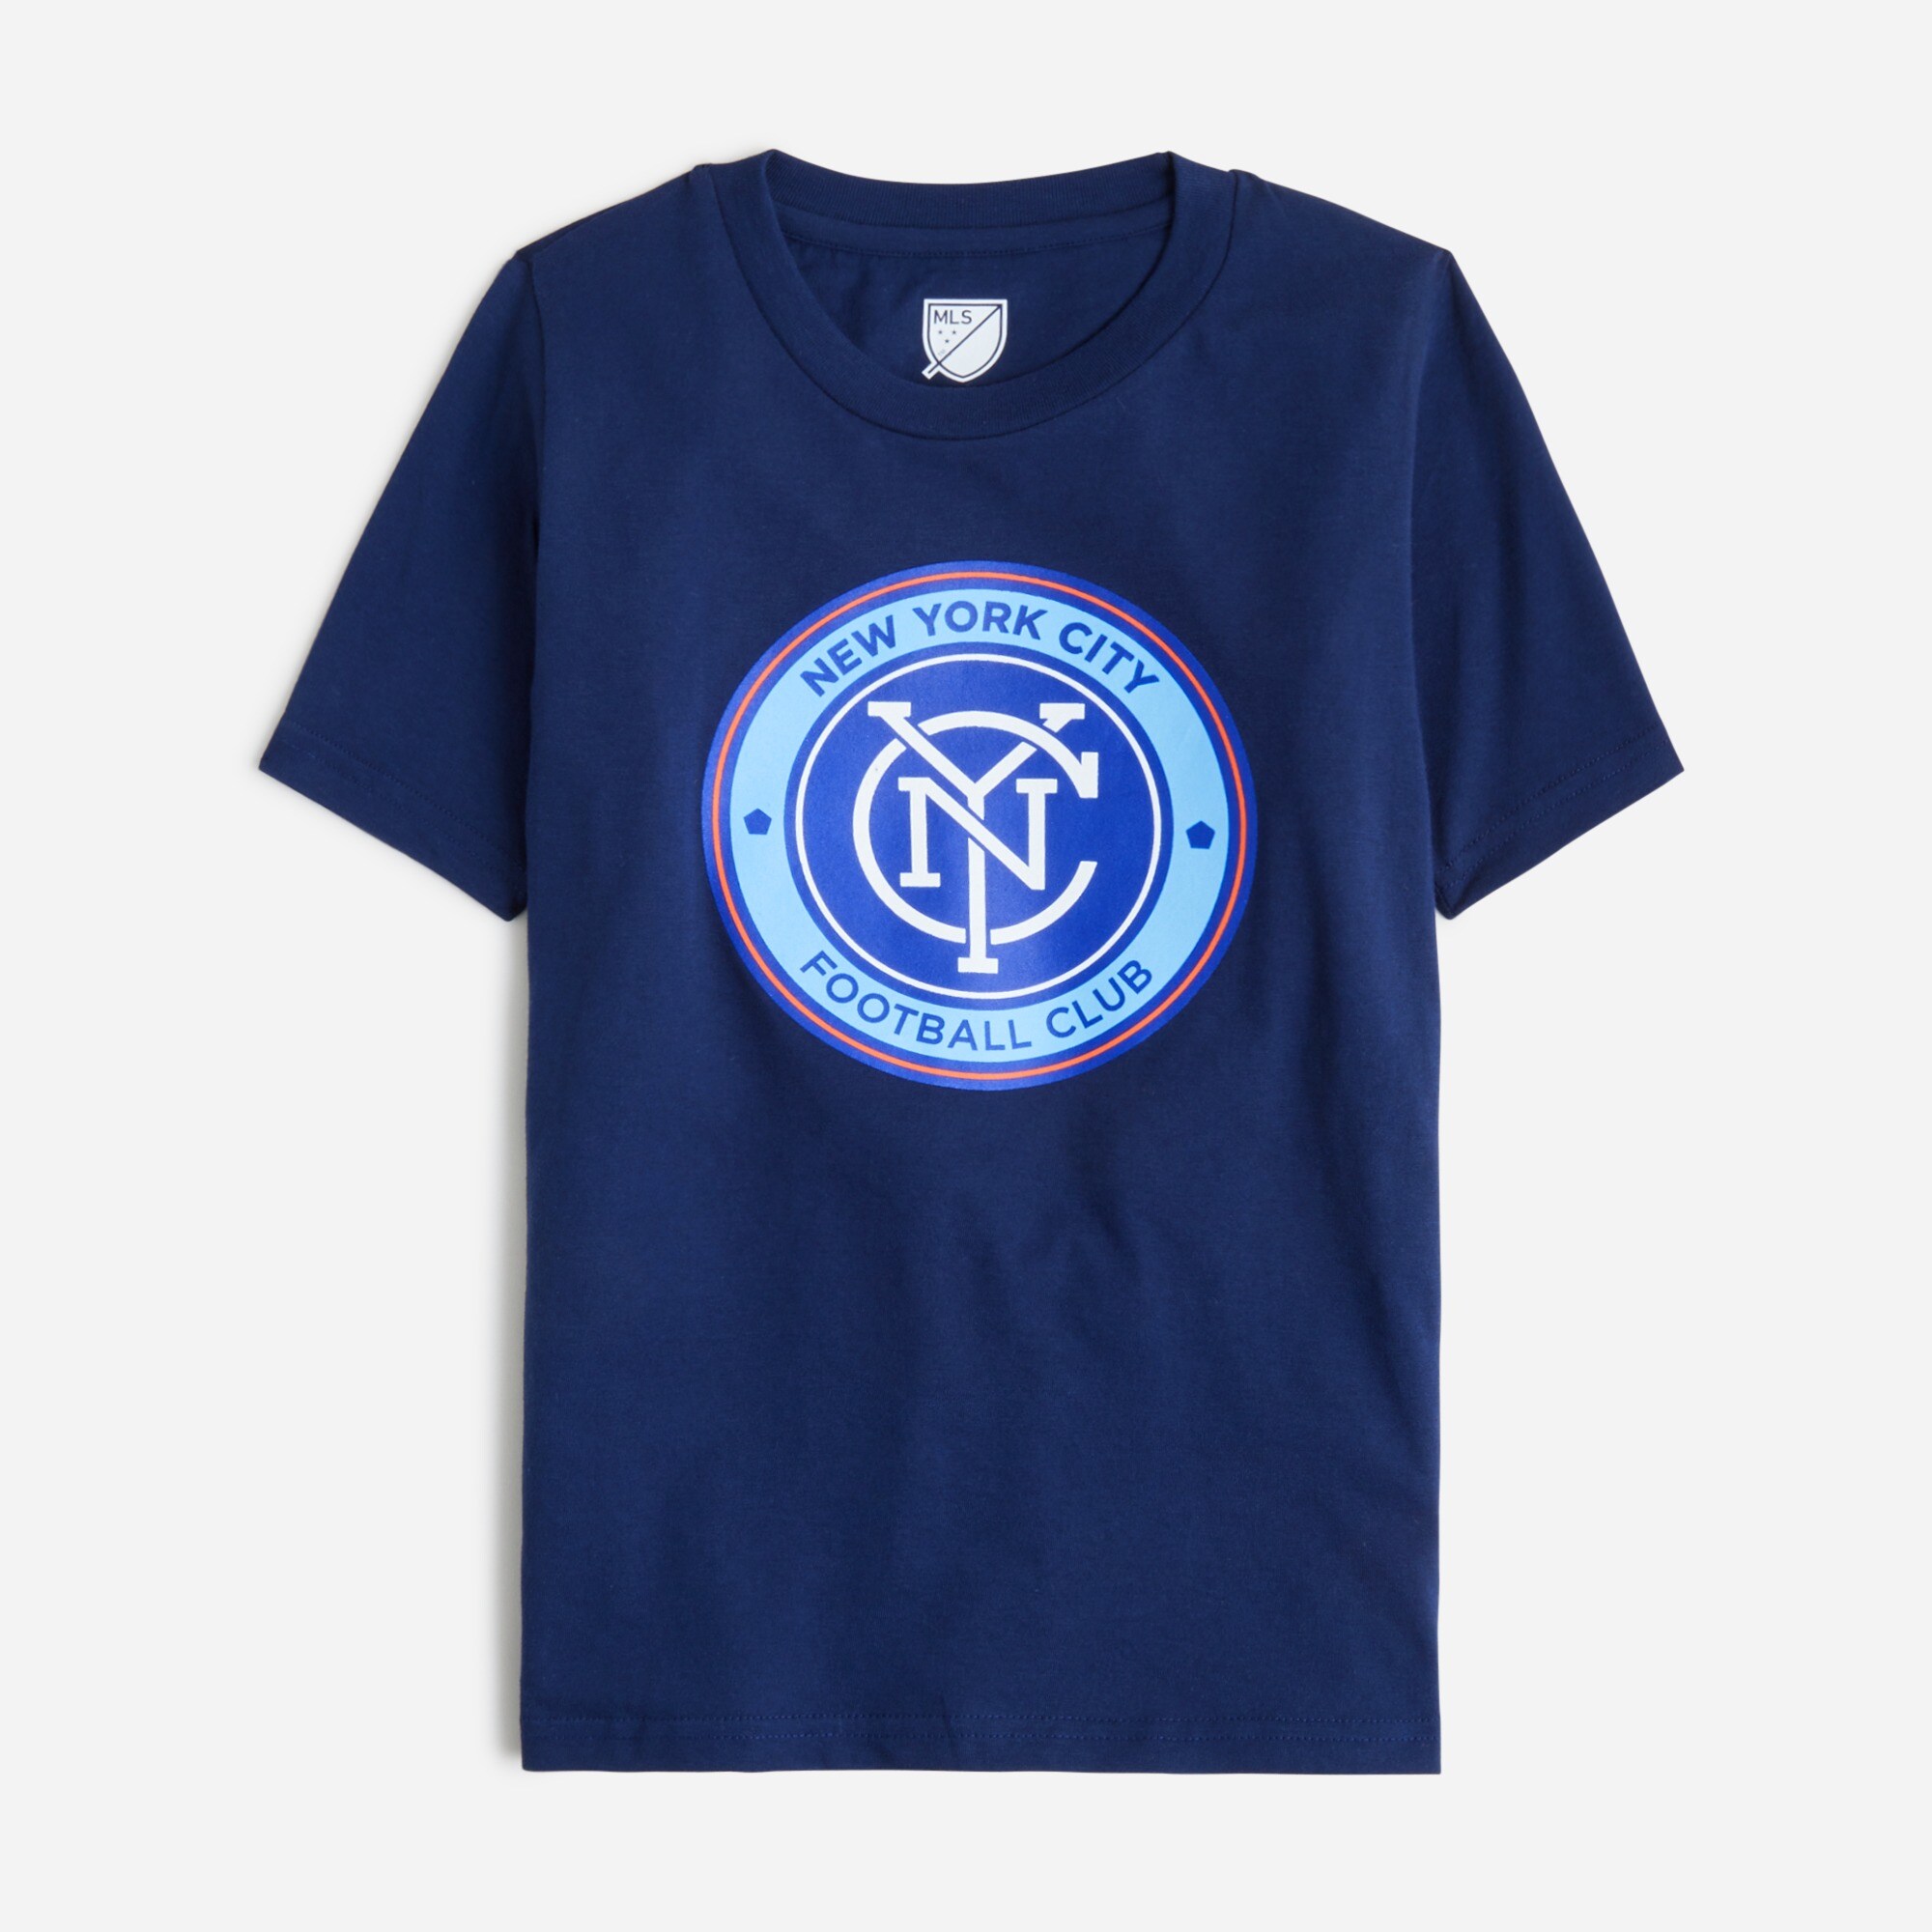  Kids' New York City Football Club graphic T-shirt